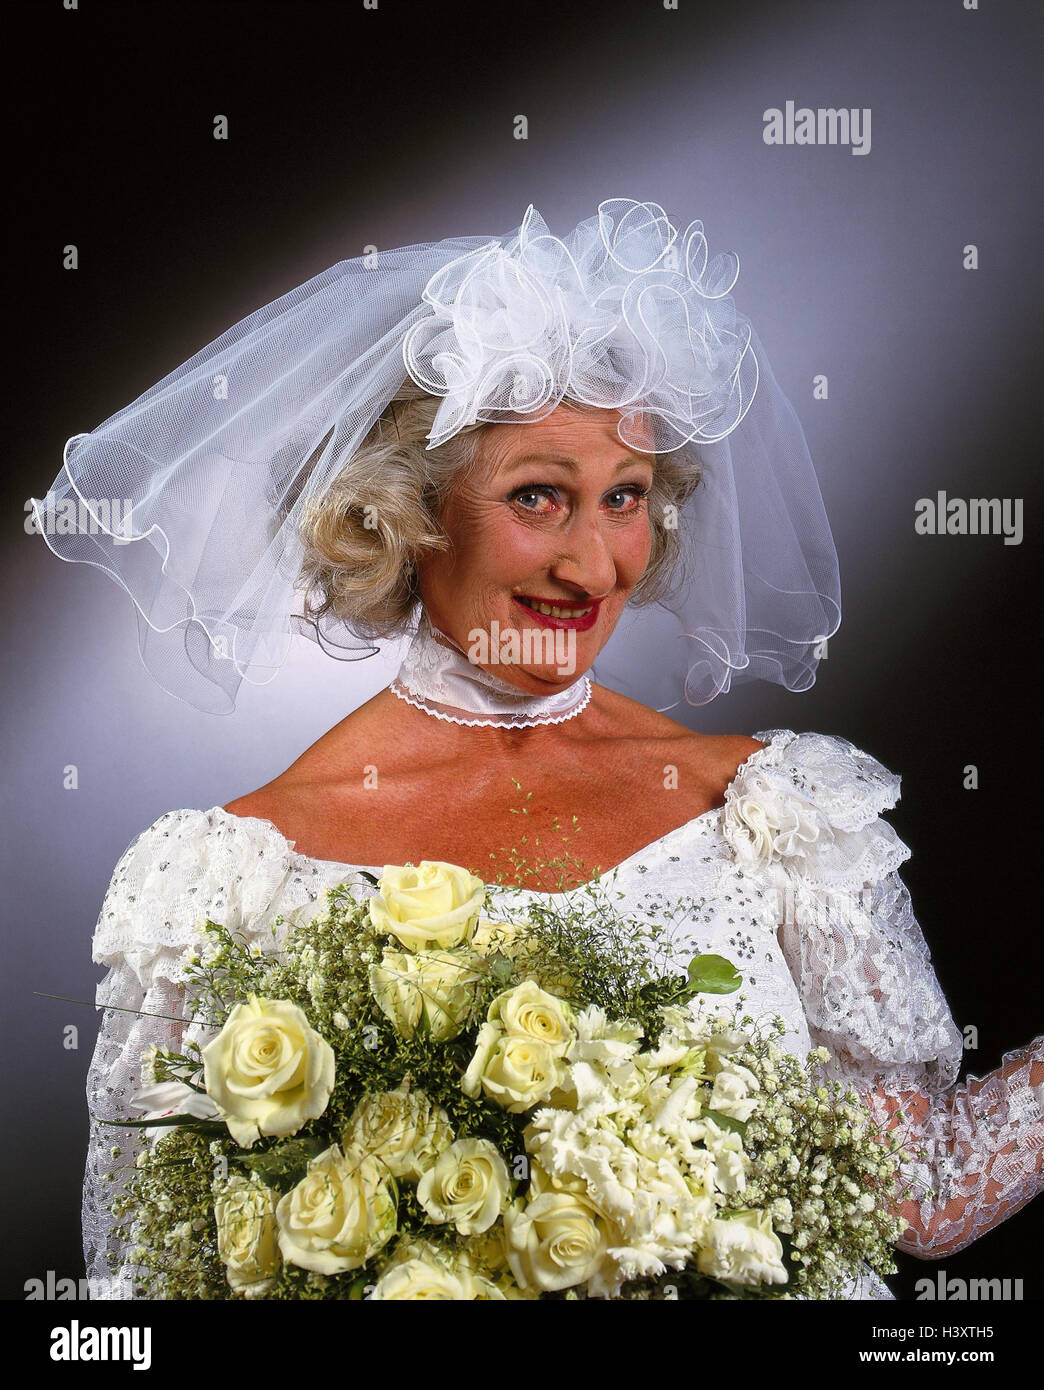 https://c8.alamy.com/comp/H3XTH5/bride-senior-wedding-dress-veil-bridal-bouquet-facial-play-portrait-H3XTH5.jpg